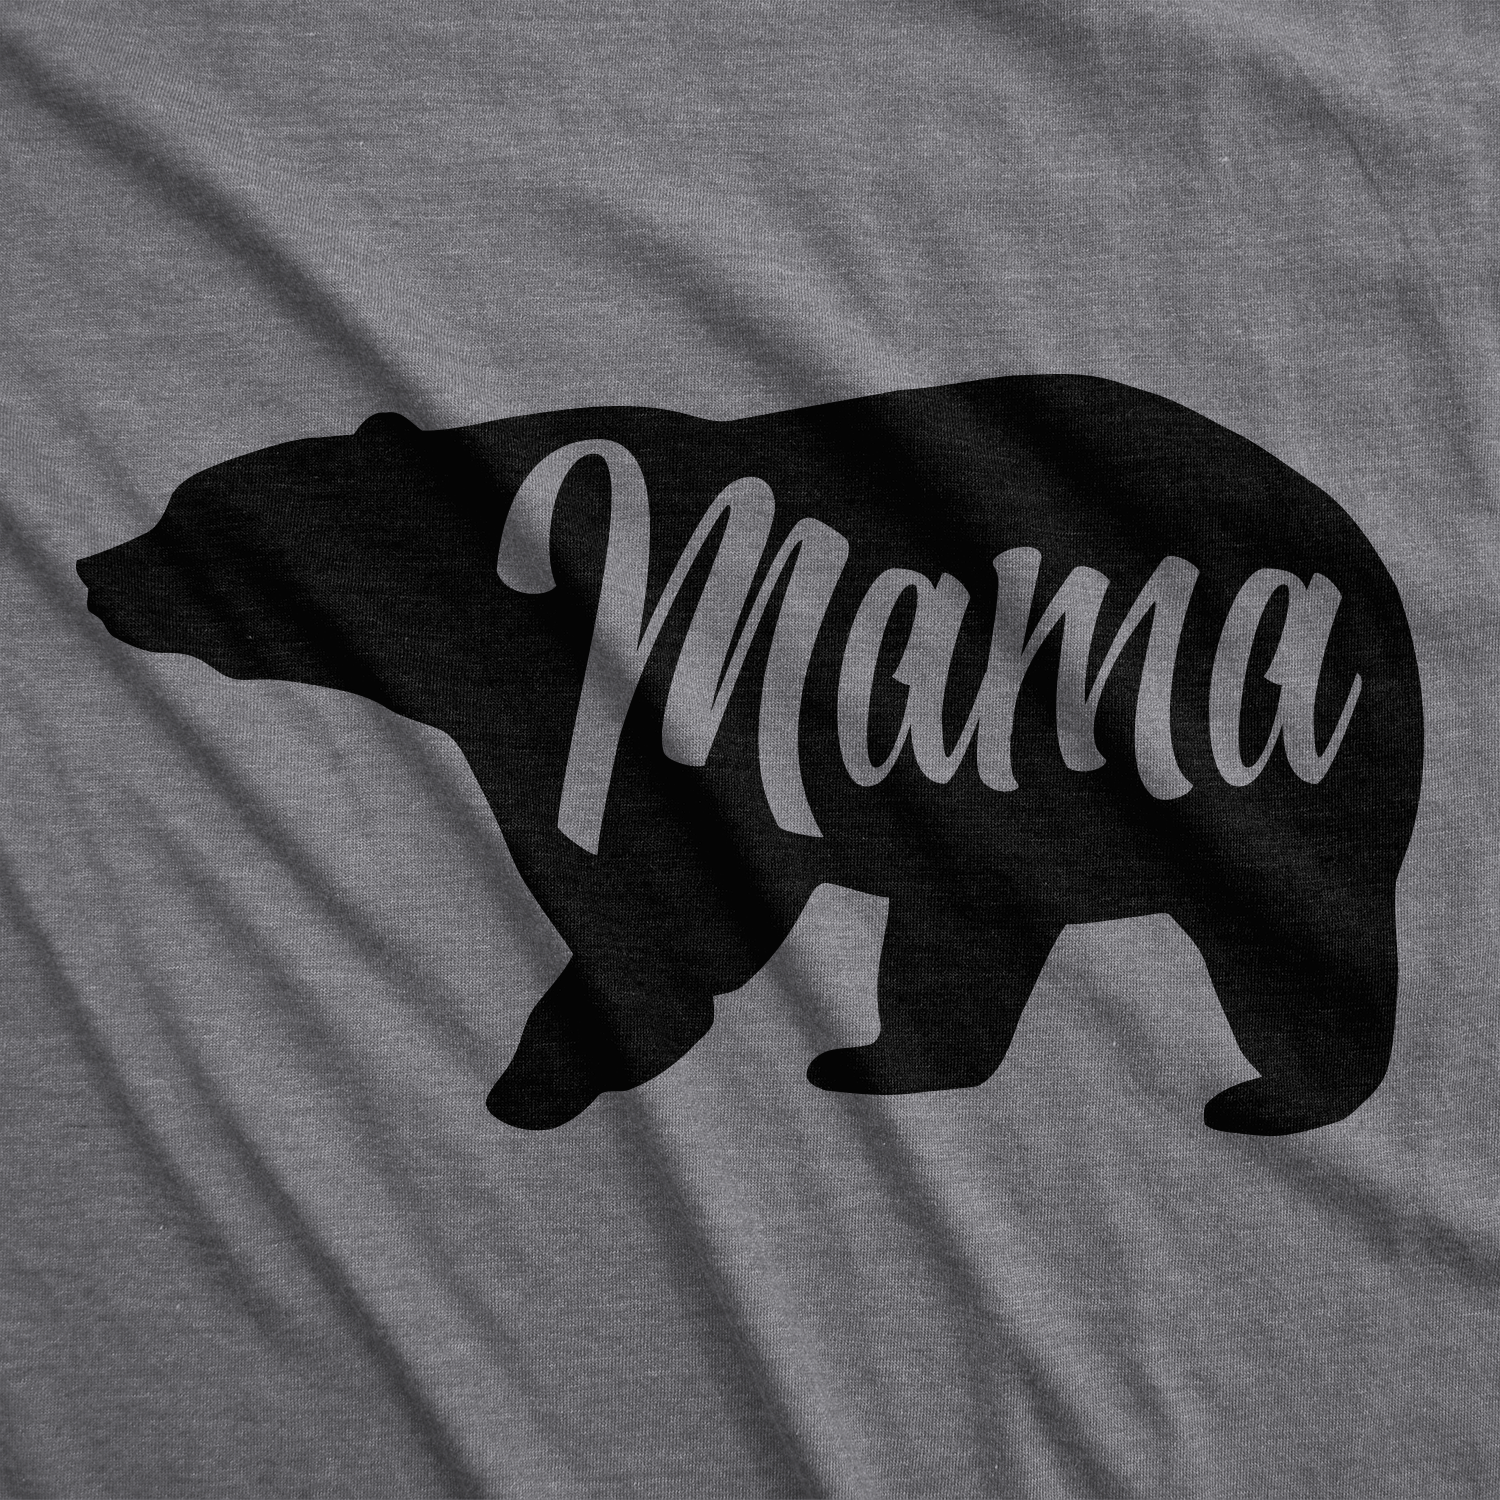 Funny Mama Bear Womens T Shirt Nerdy Mother's Day Animal Tee